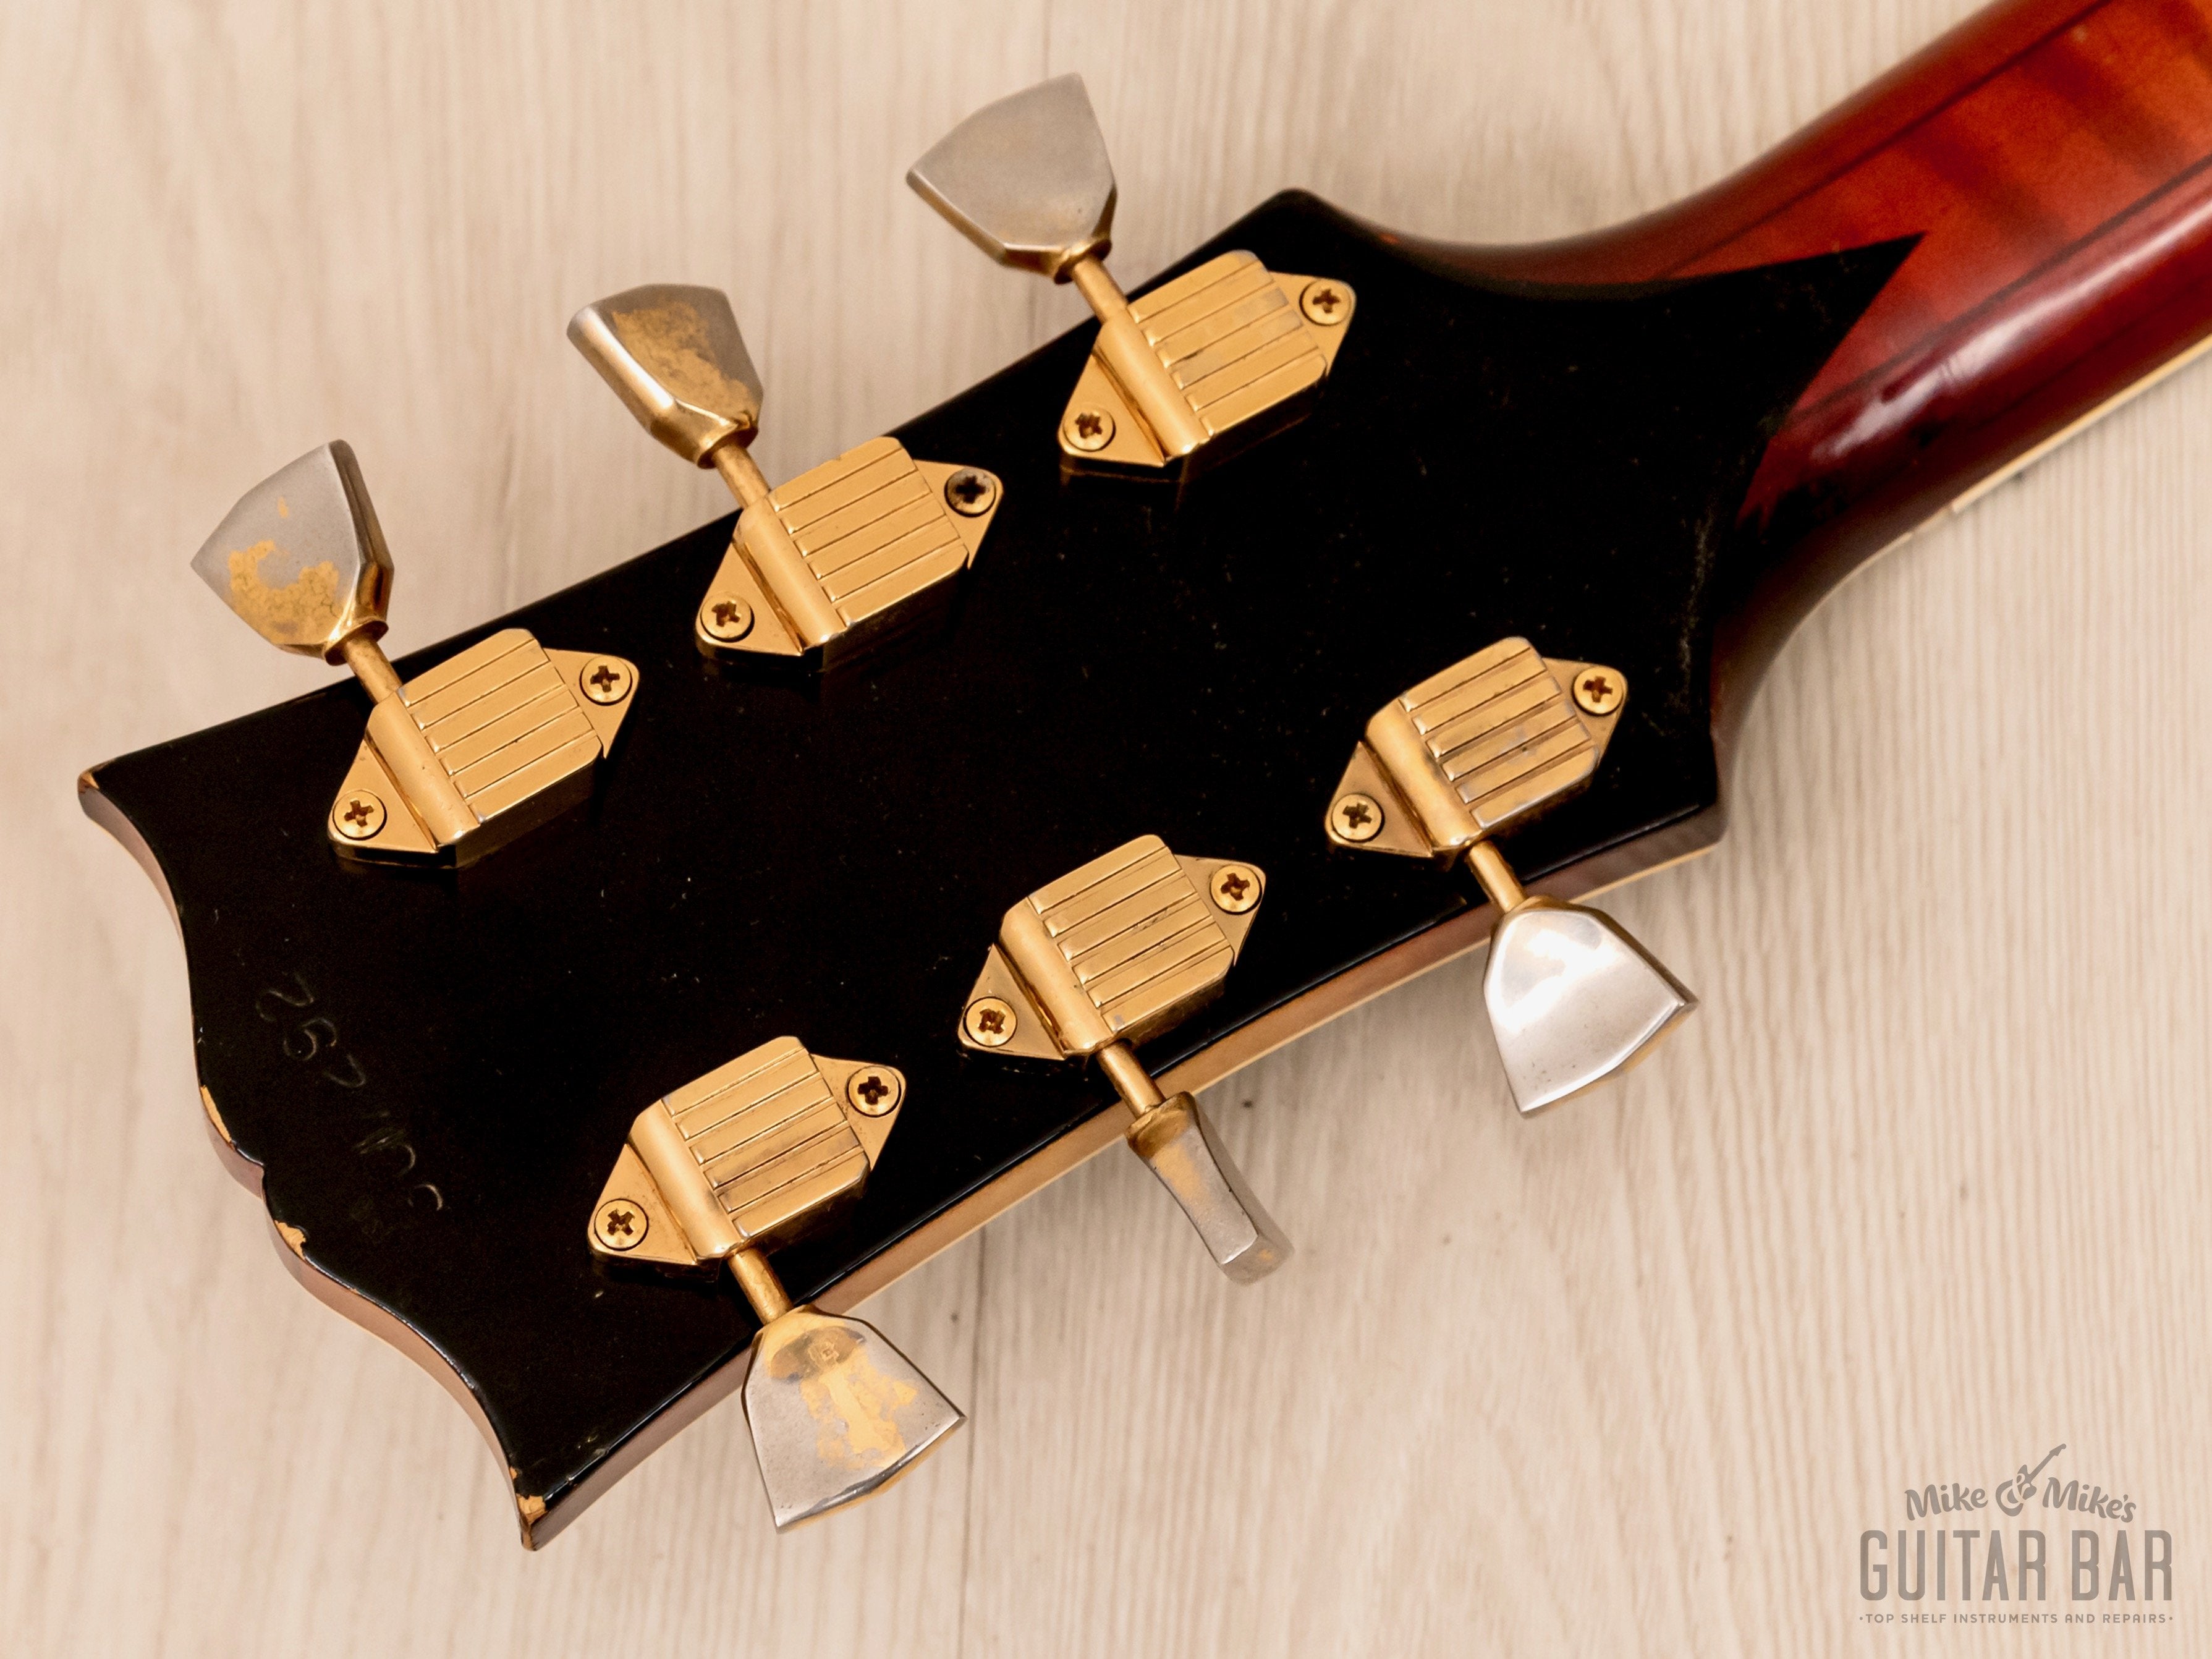 1965 Gibson J-200 Jumbo Vintage Acoustic Guitar Cherry Sunburst, Wide Nut w/ Case